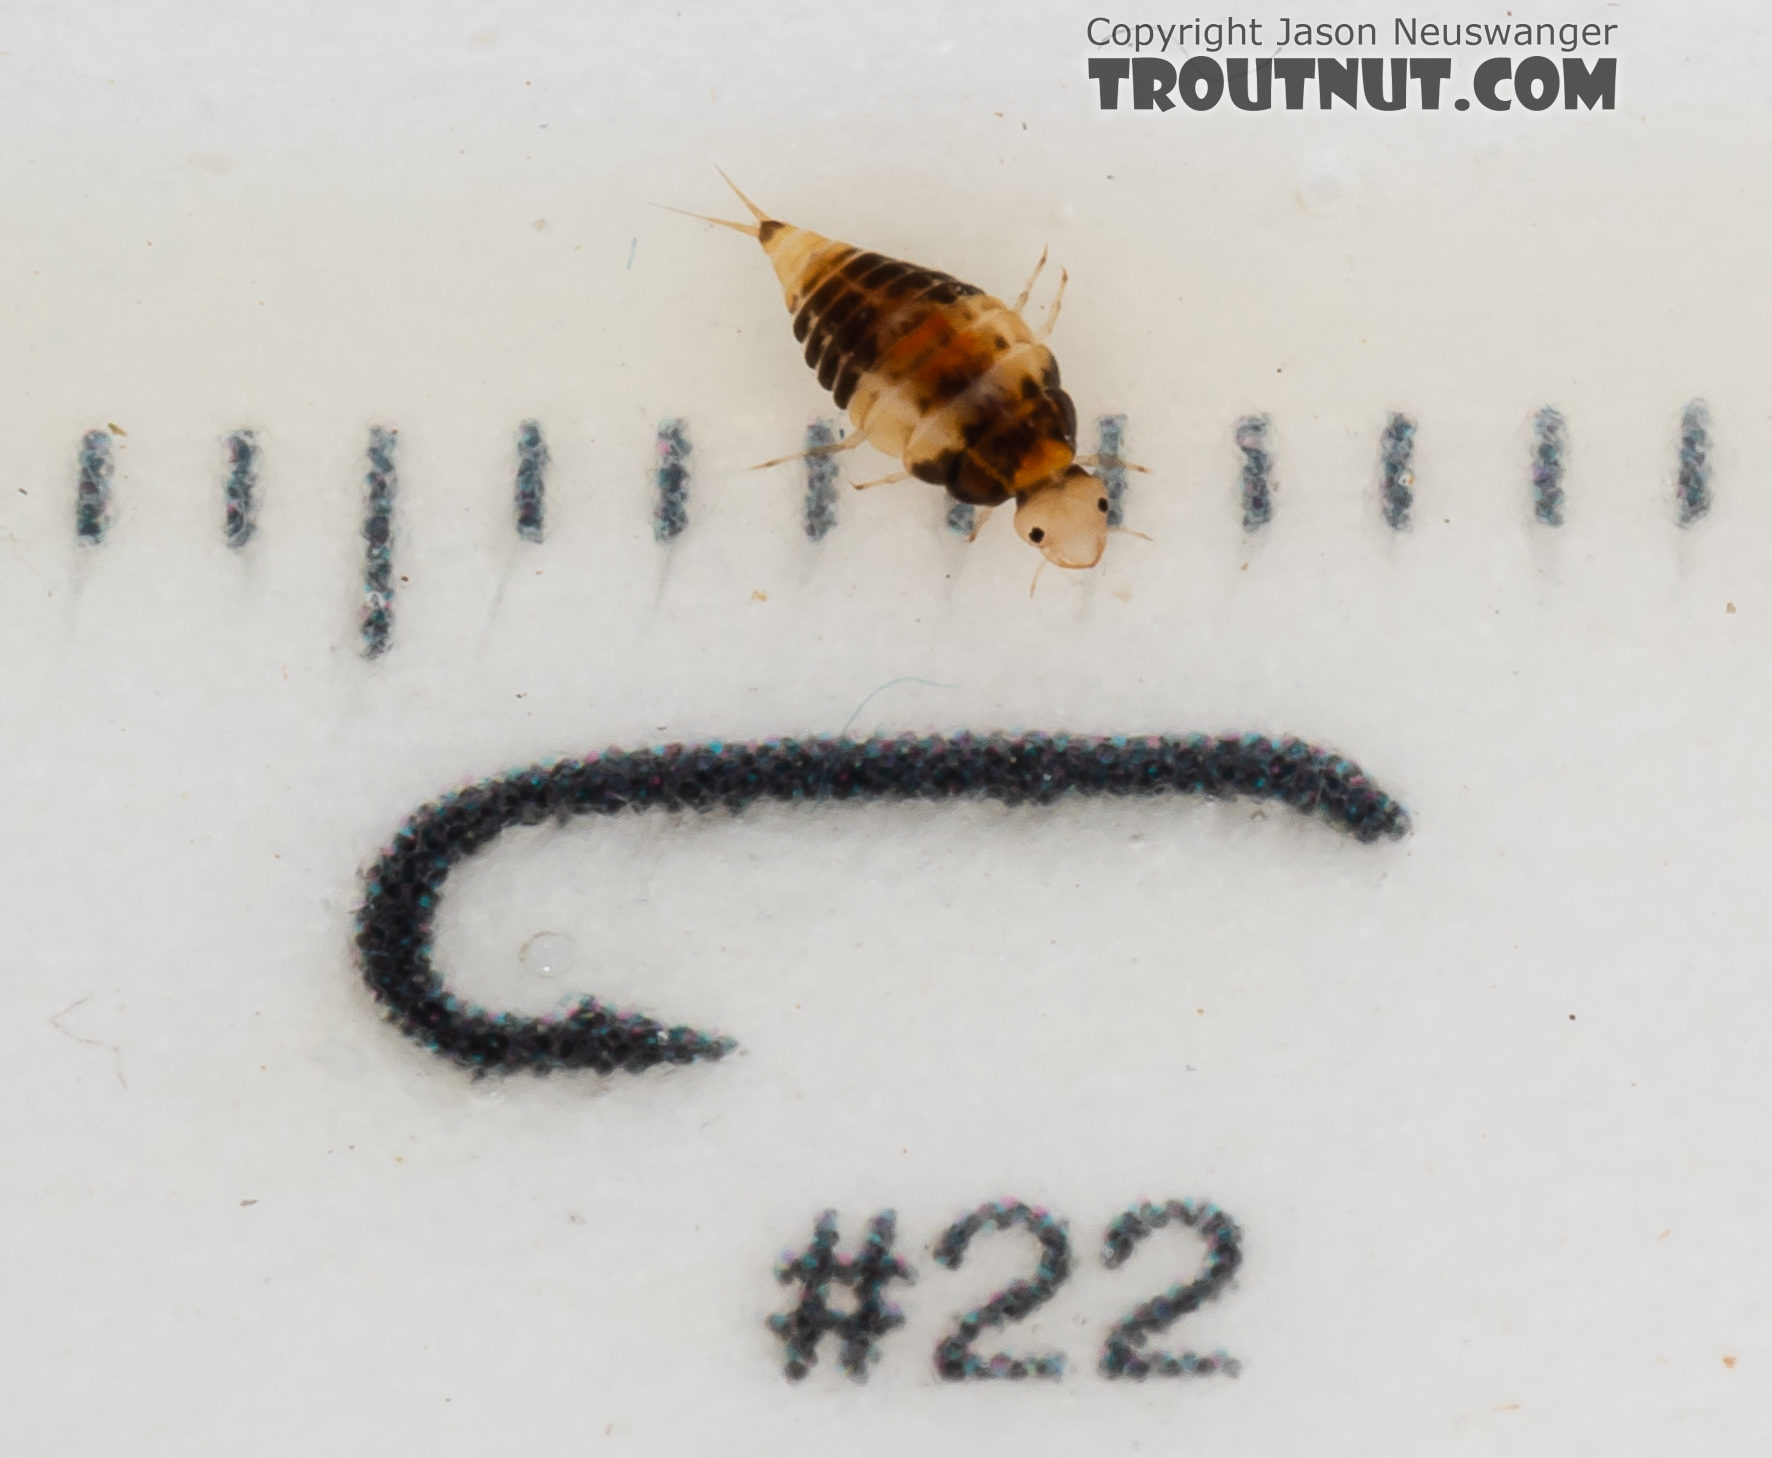 Coleoptera (Beetles) Beetle Larva from Mystery Creek #249 in Washington